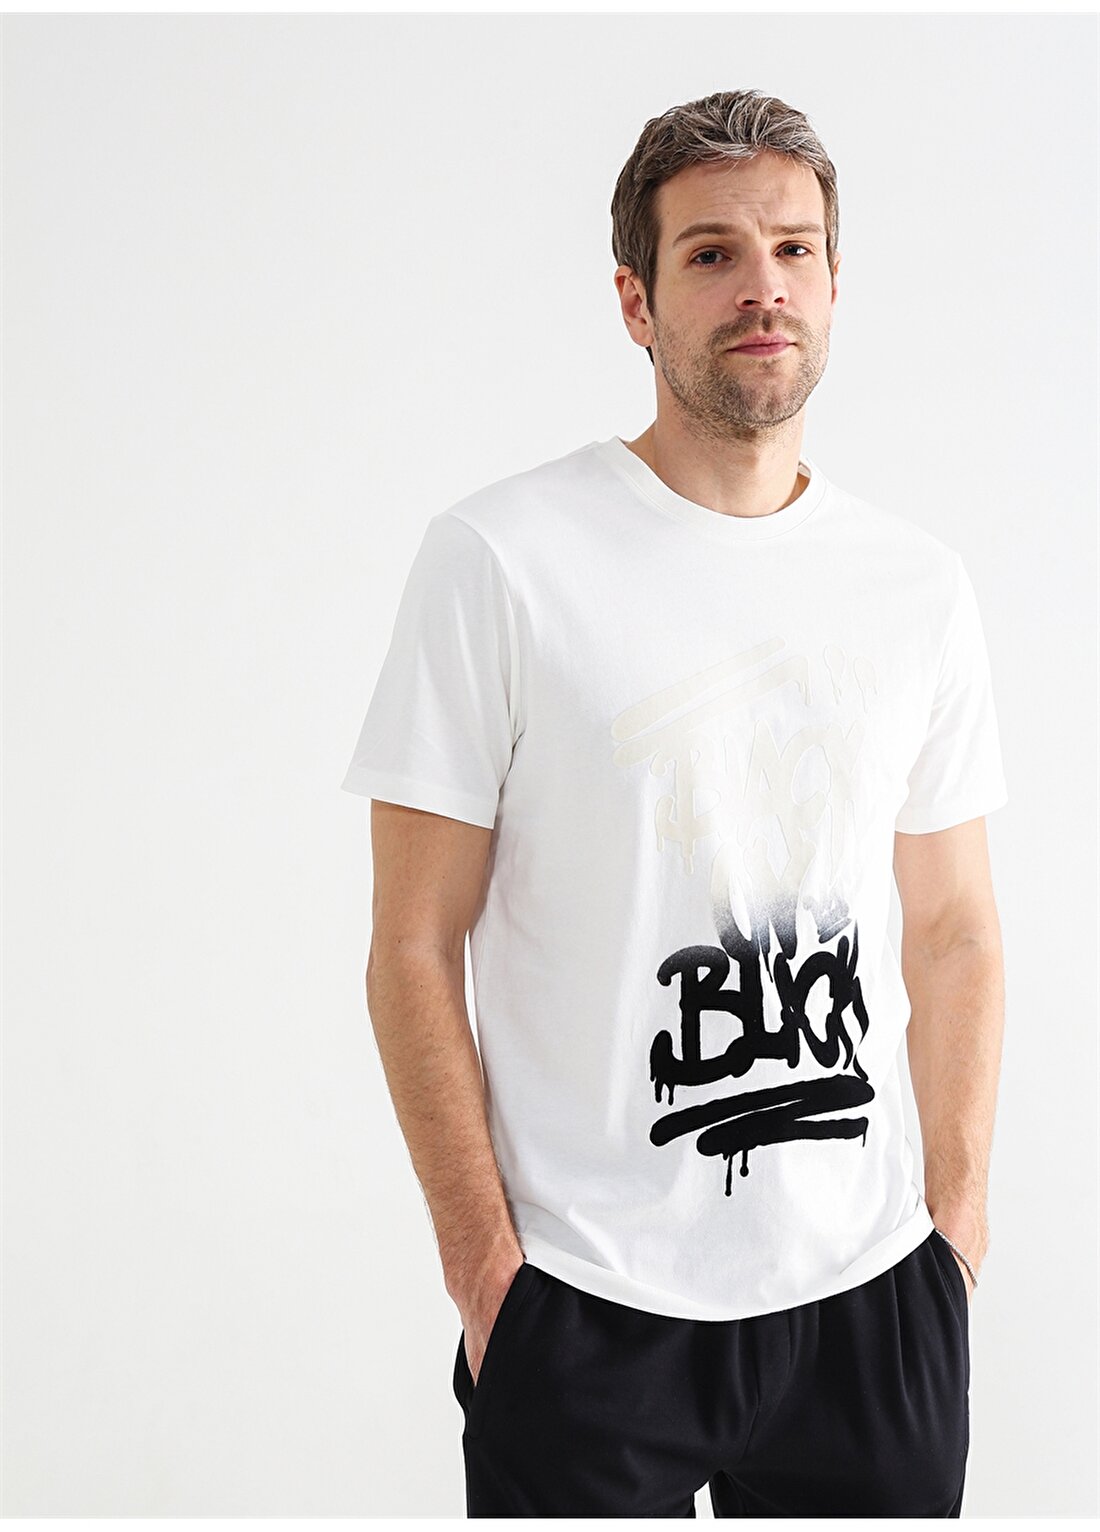 Black On Black Bisiklet Yaka Baskılı Kırık Beyaz Erkek T-Shirt E-SUNAZ